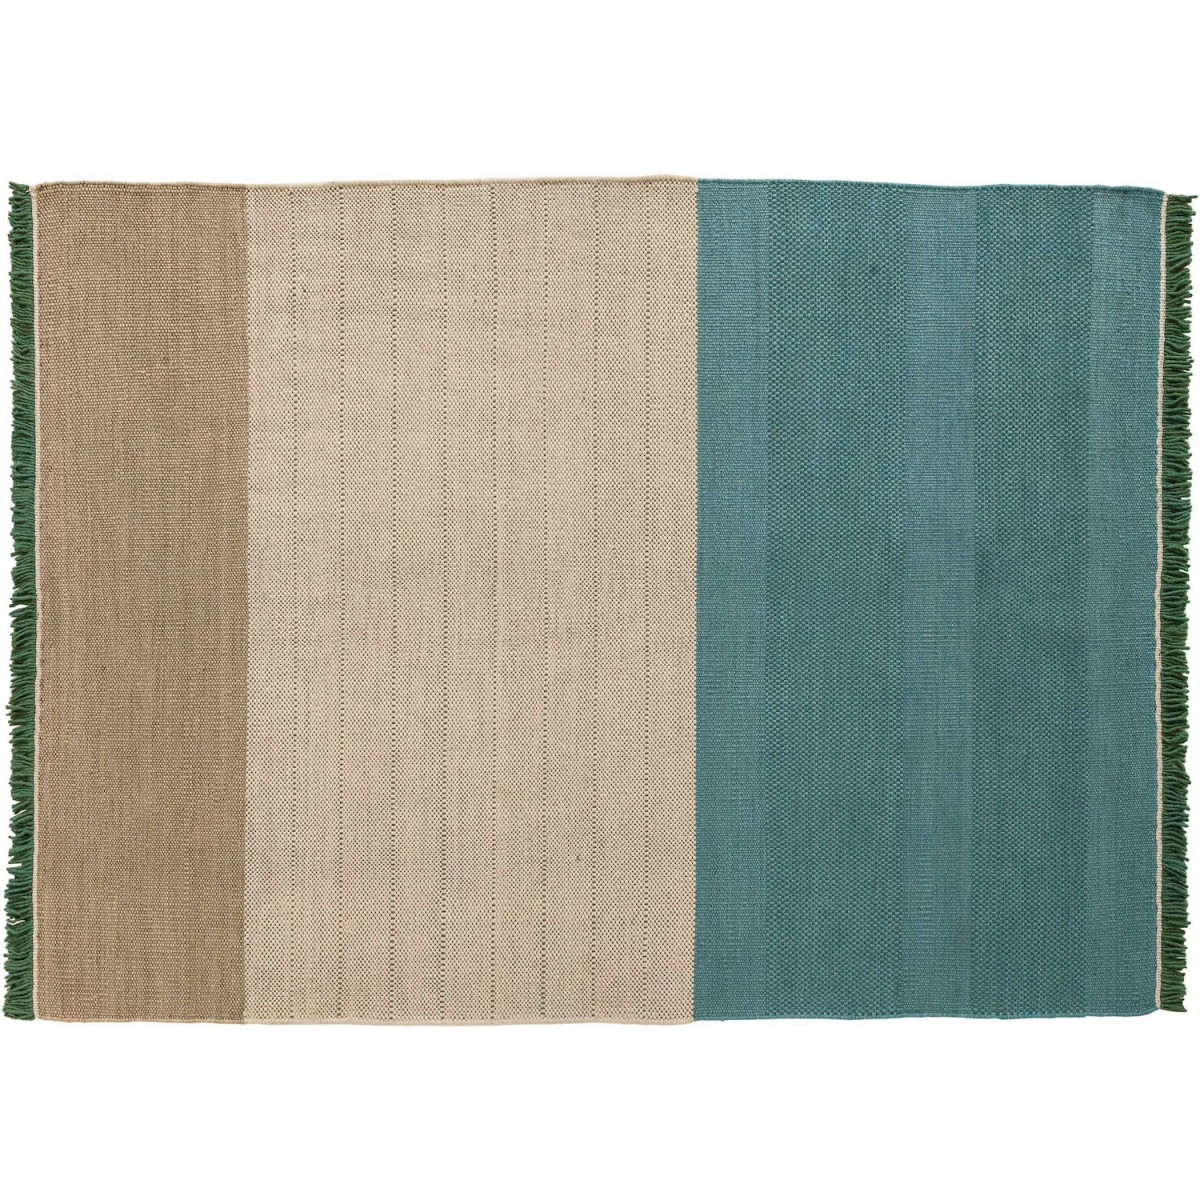 300x400cm - green - Tres Stripes rug